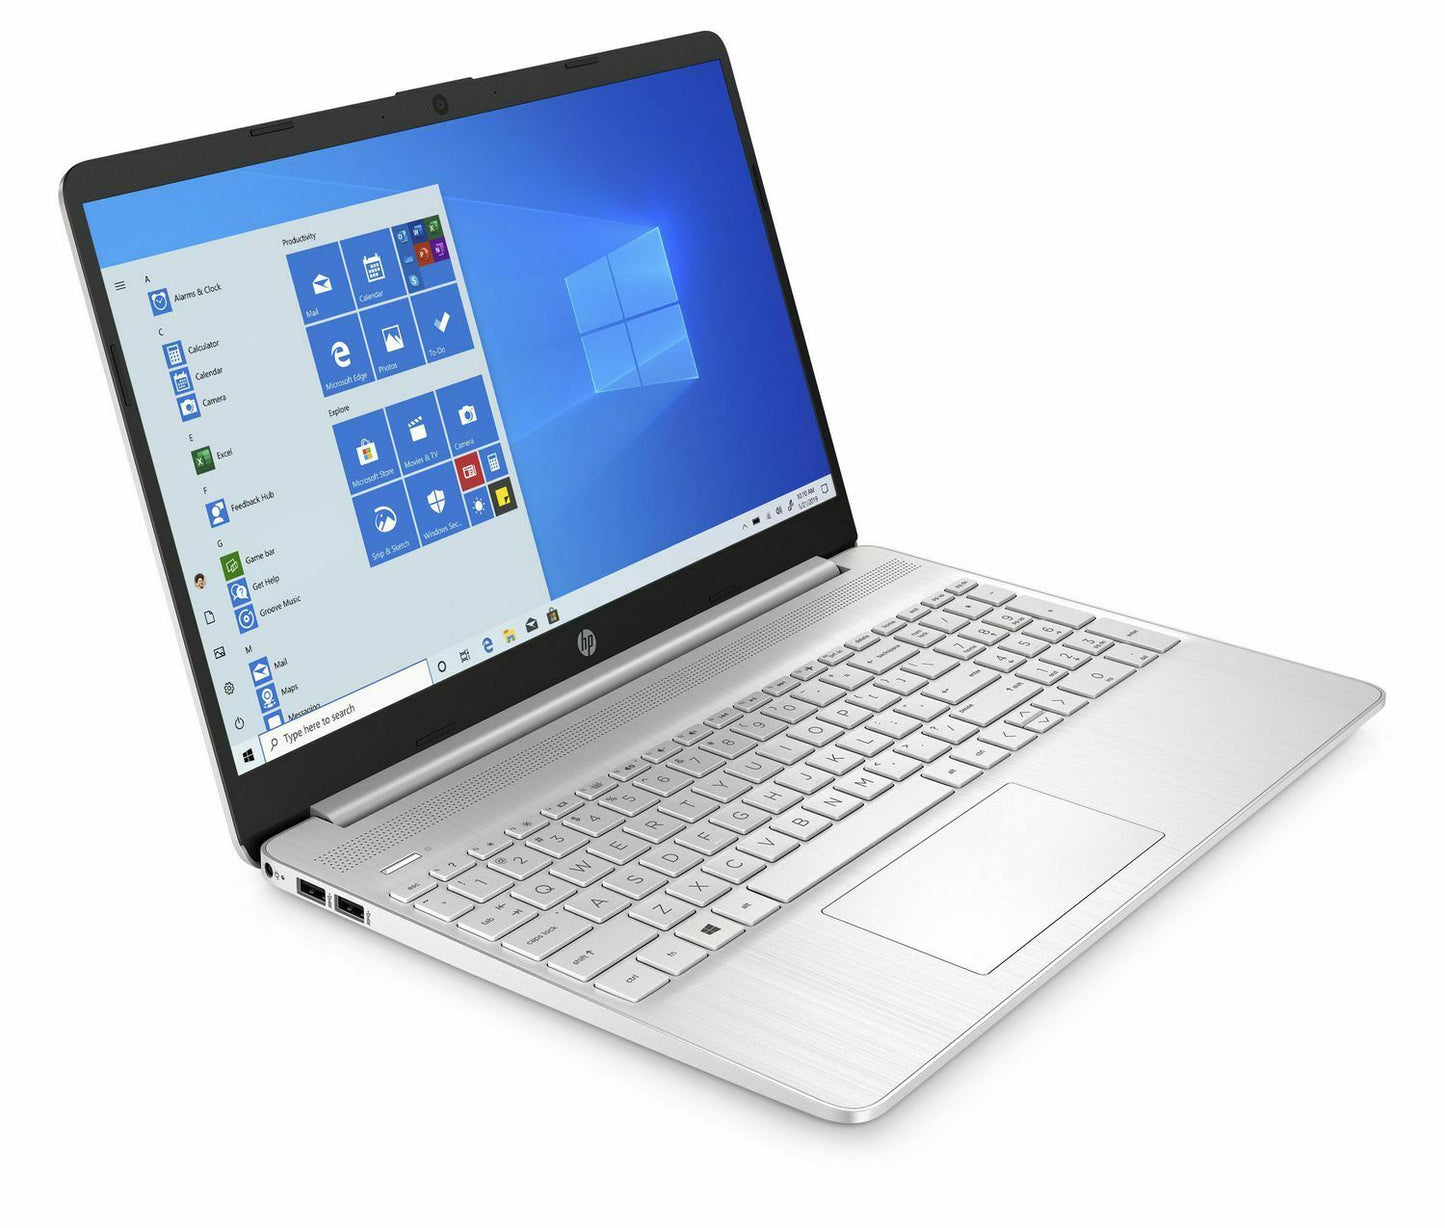 HP 15.6" Laptop Intel Celeron N4500 Dual-Core 4GB RAM 128GB SSD Win10 Silver